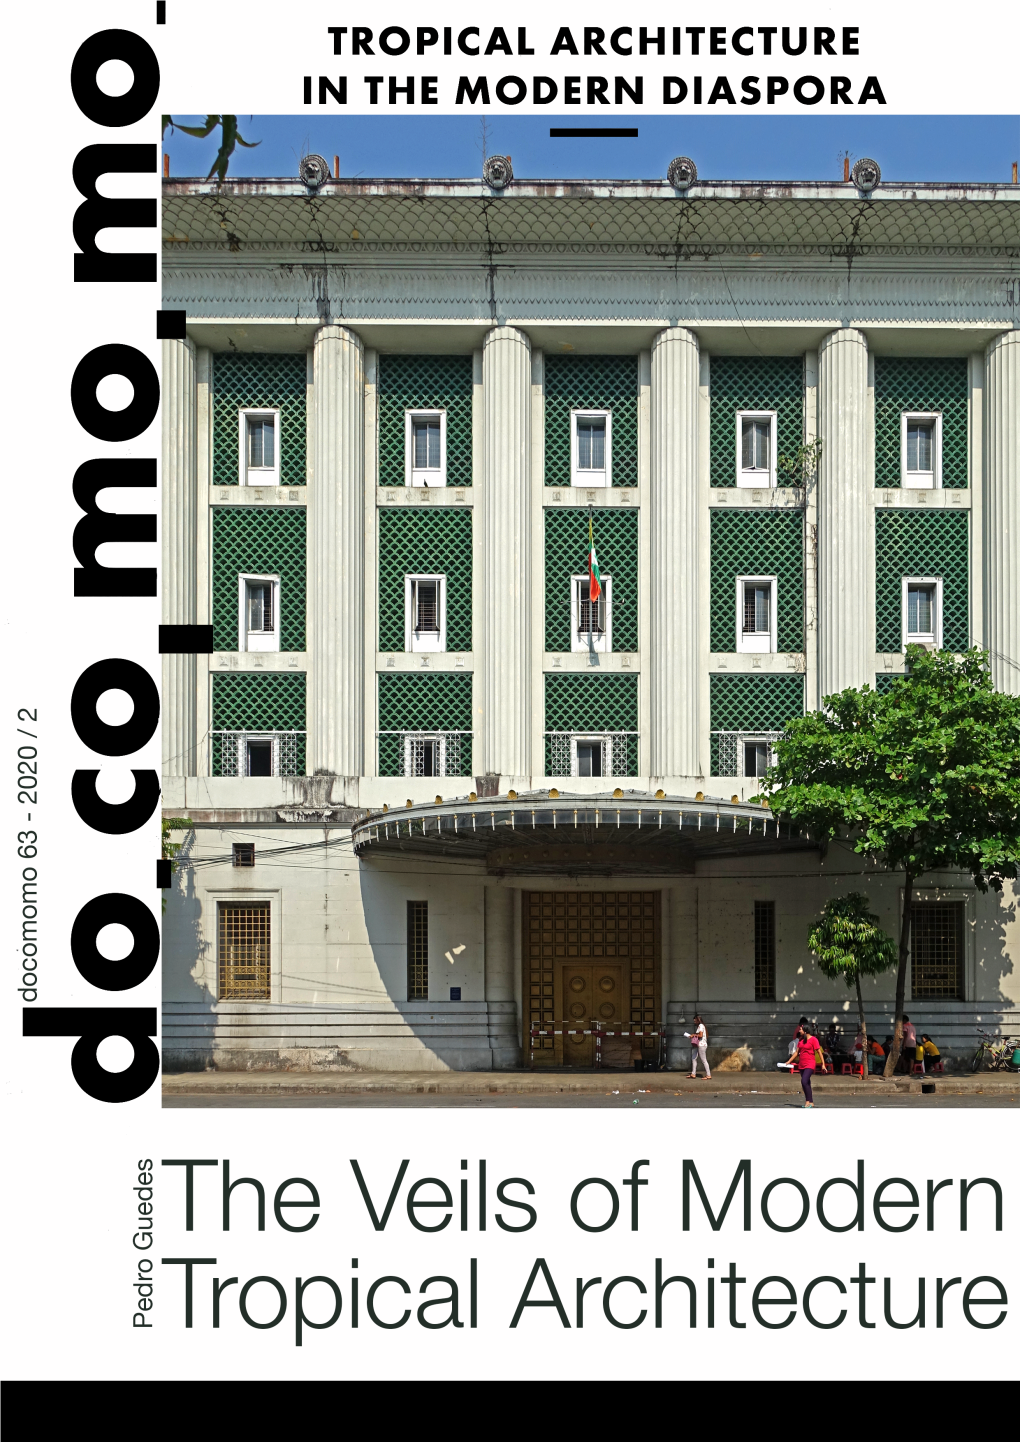 Behind the Veils of Modern Tropical Architecture’, Docomomo International, No 63, 2020 / 2, Pp